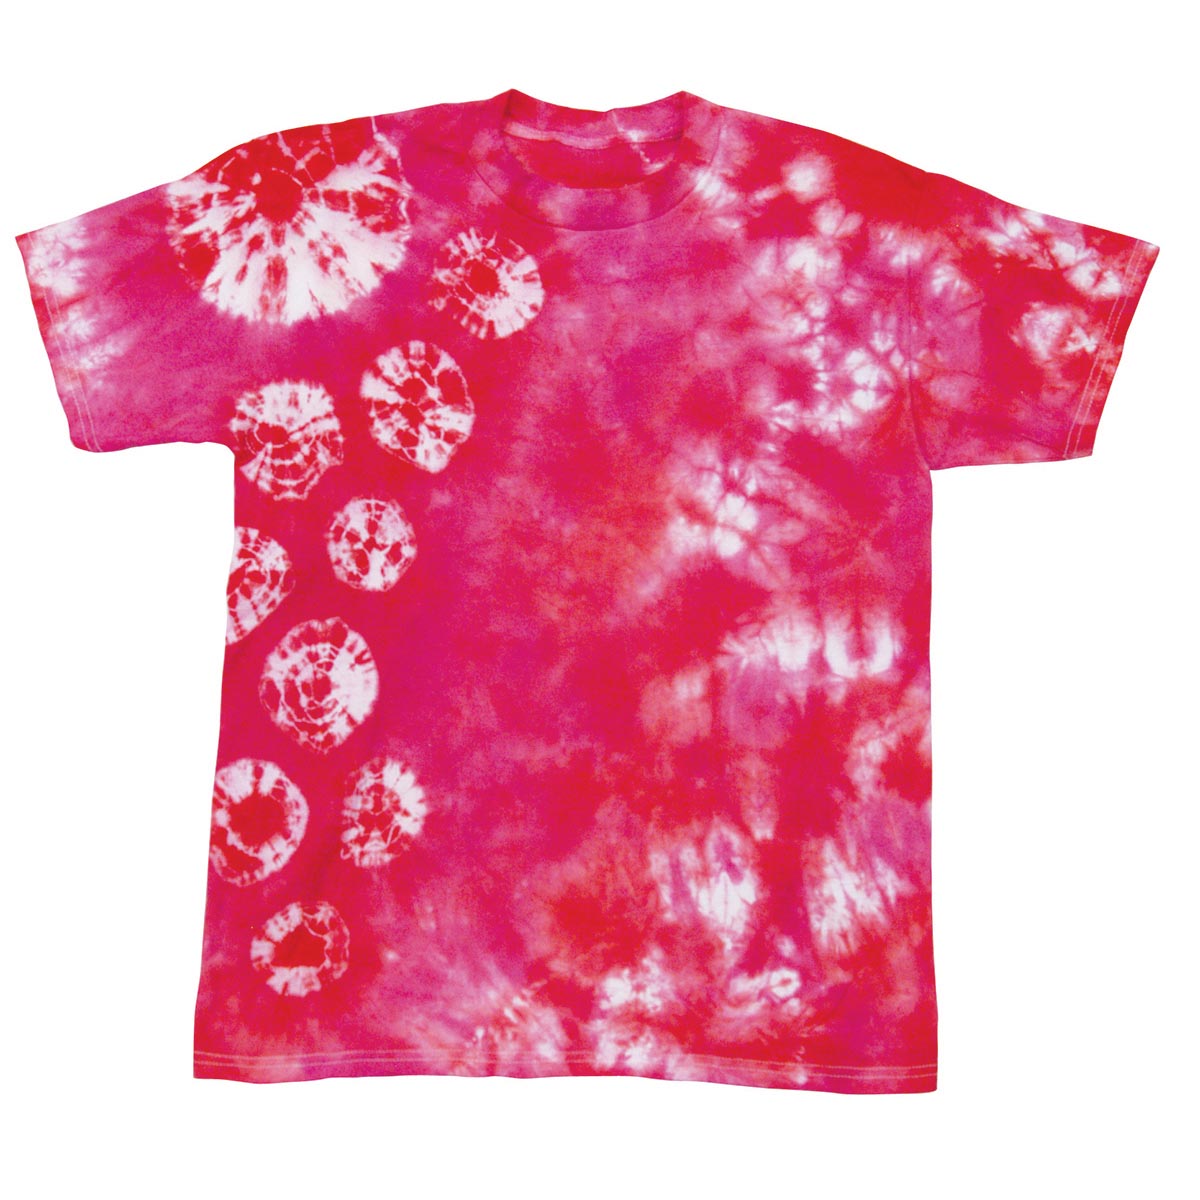 Jacquard-Batik-Set für T-Shirts - Ruby Jewel Tone